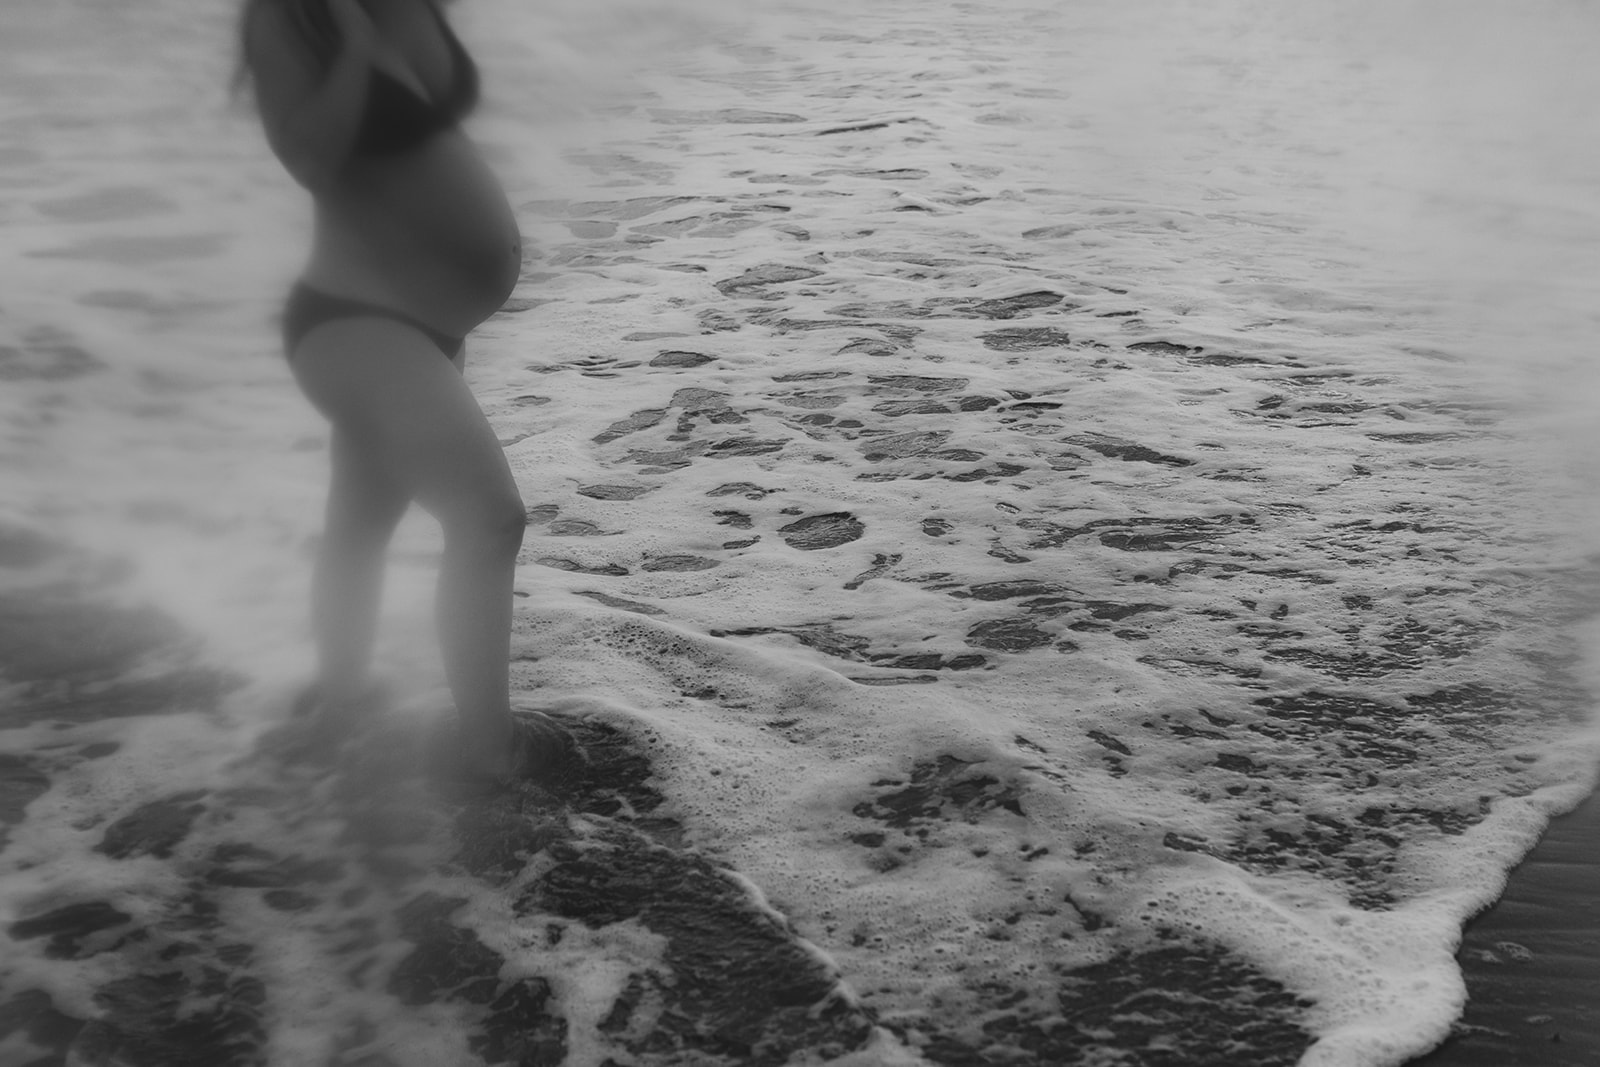 Beach Maternity Shoot